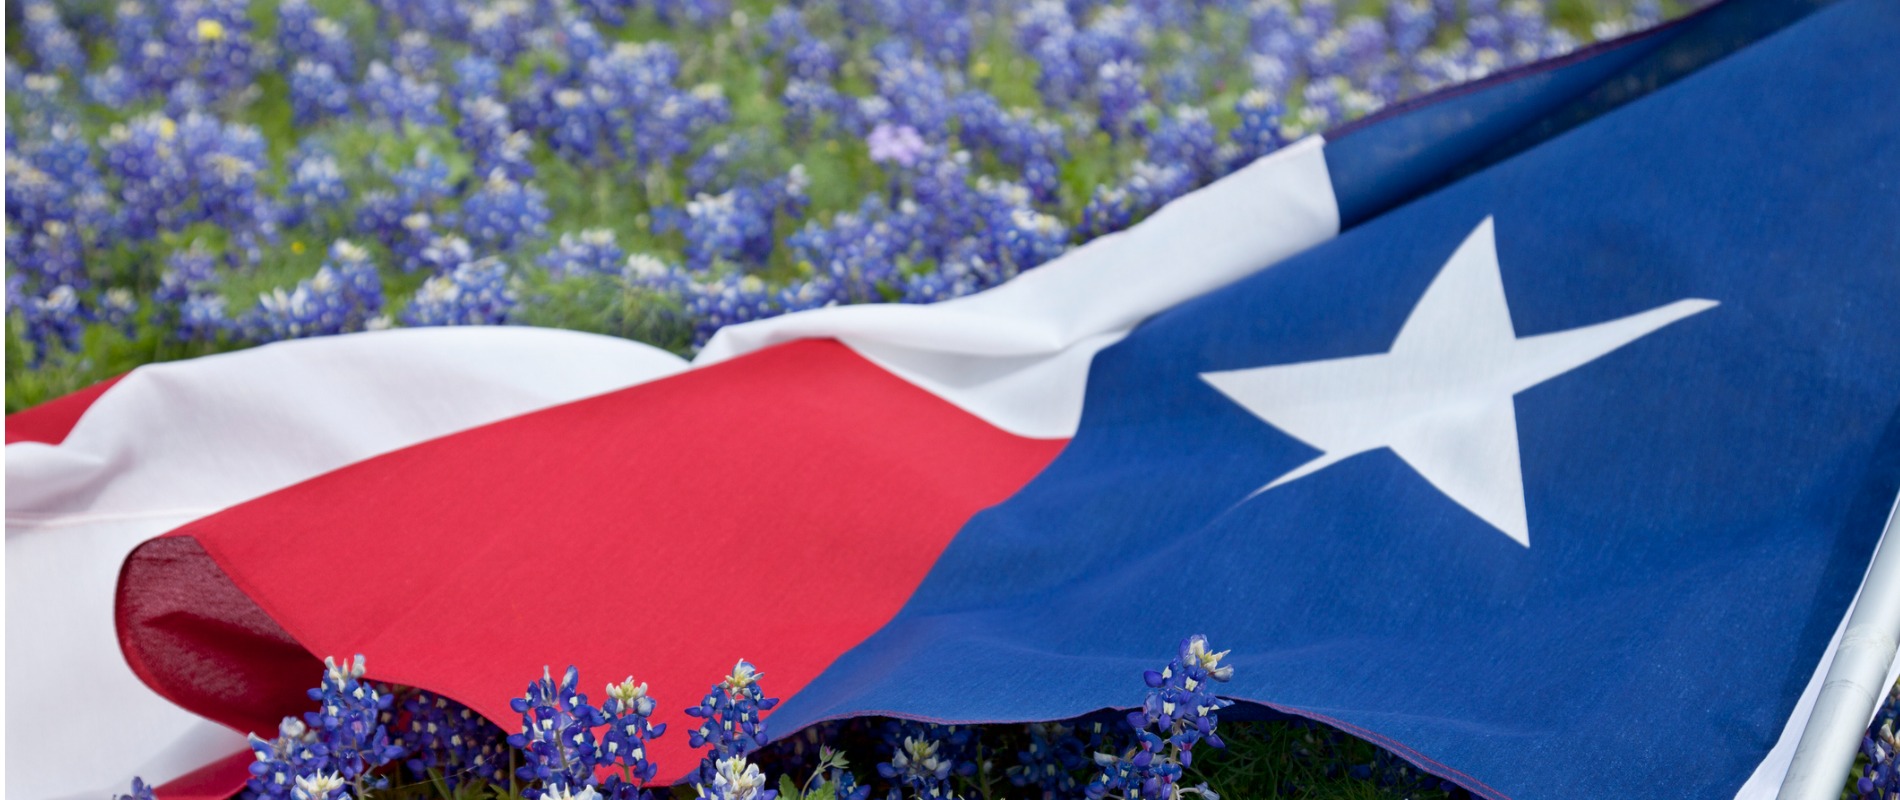 Texas Flag with Bluebonnets